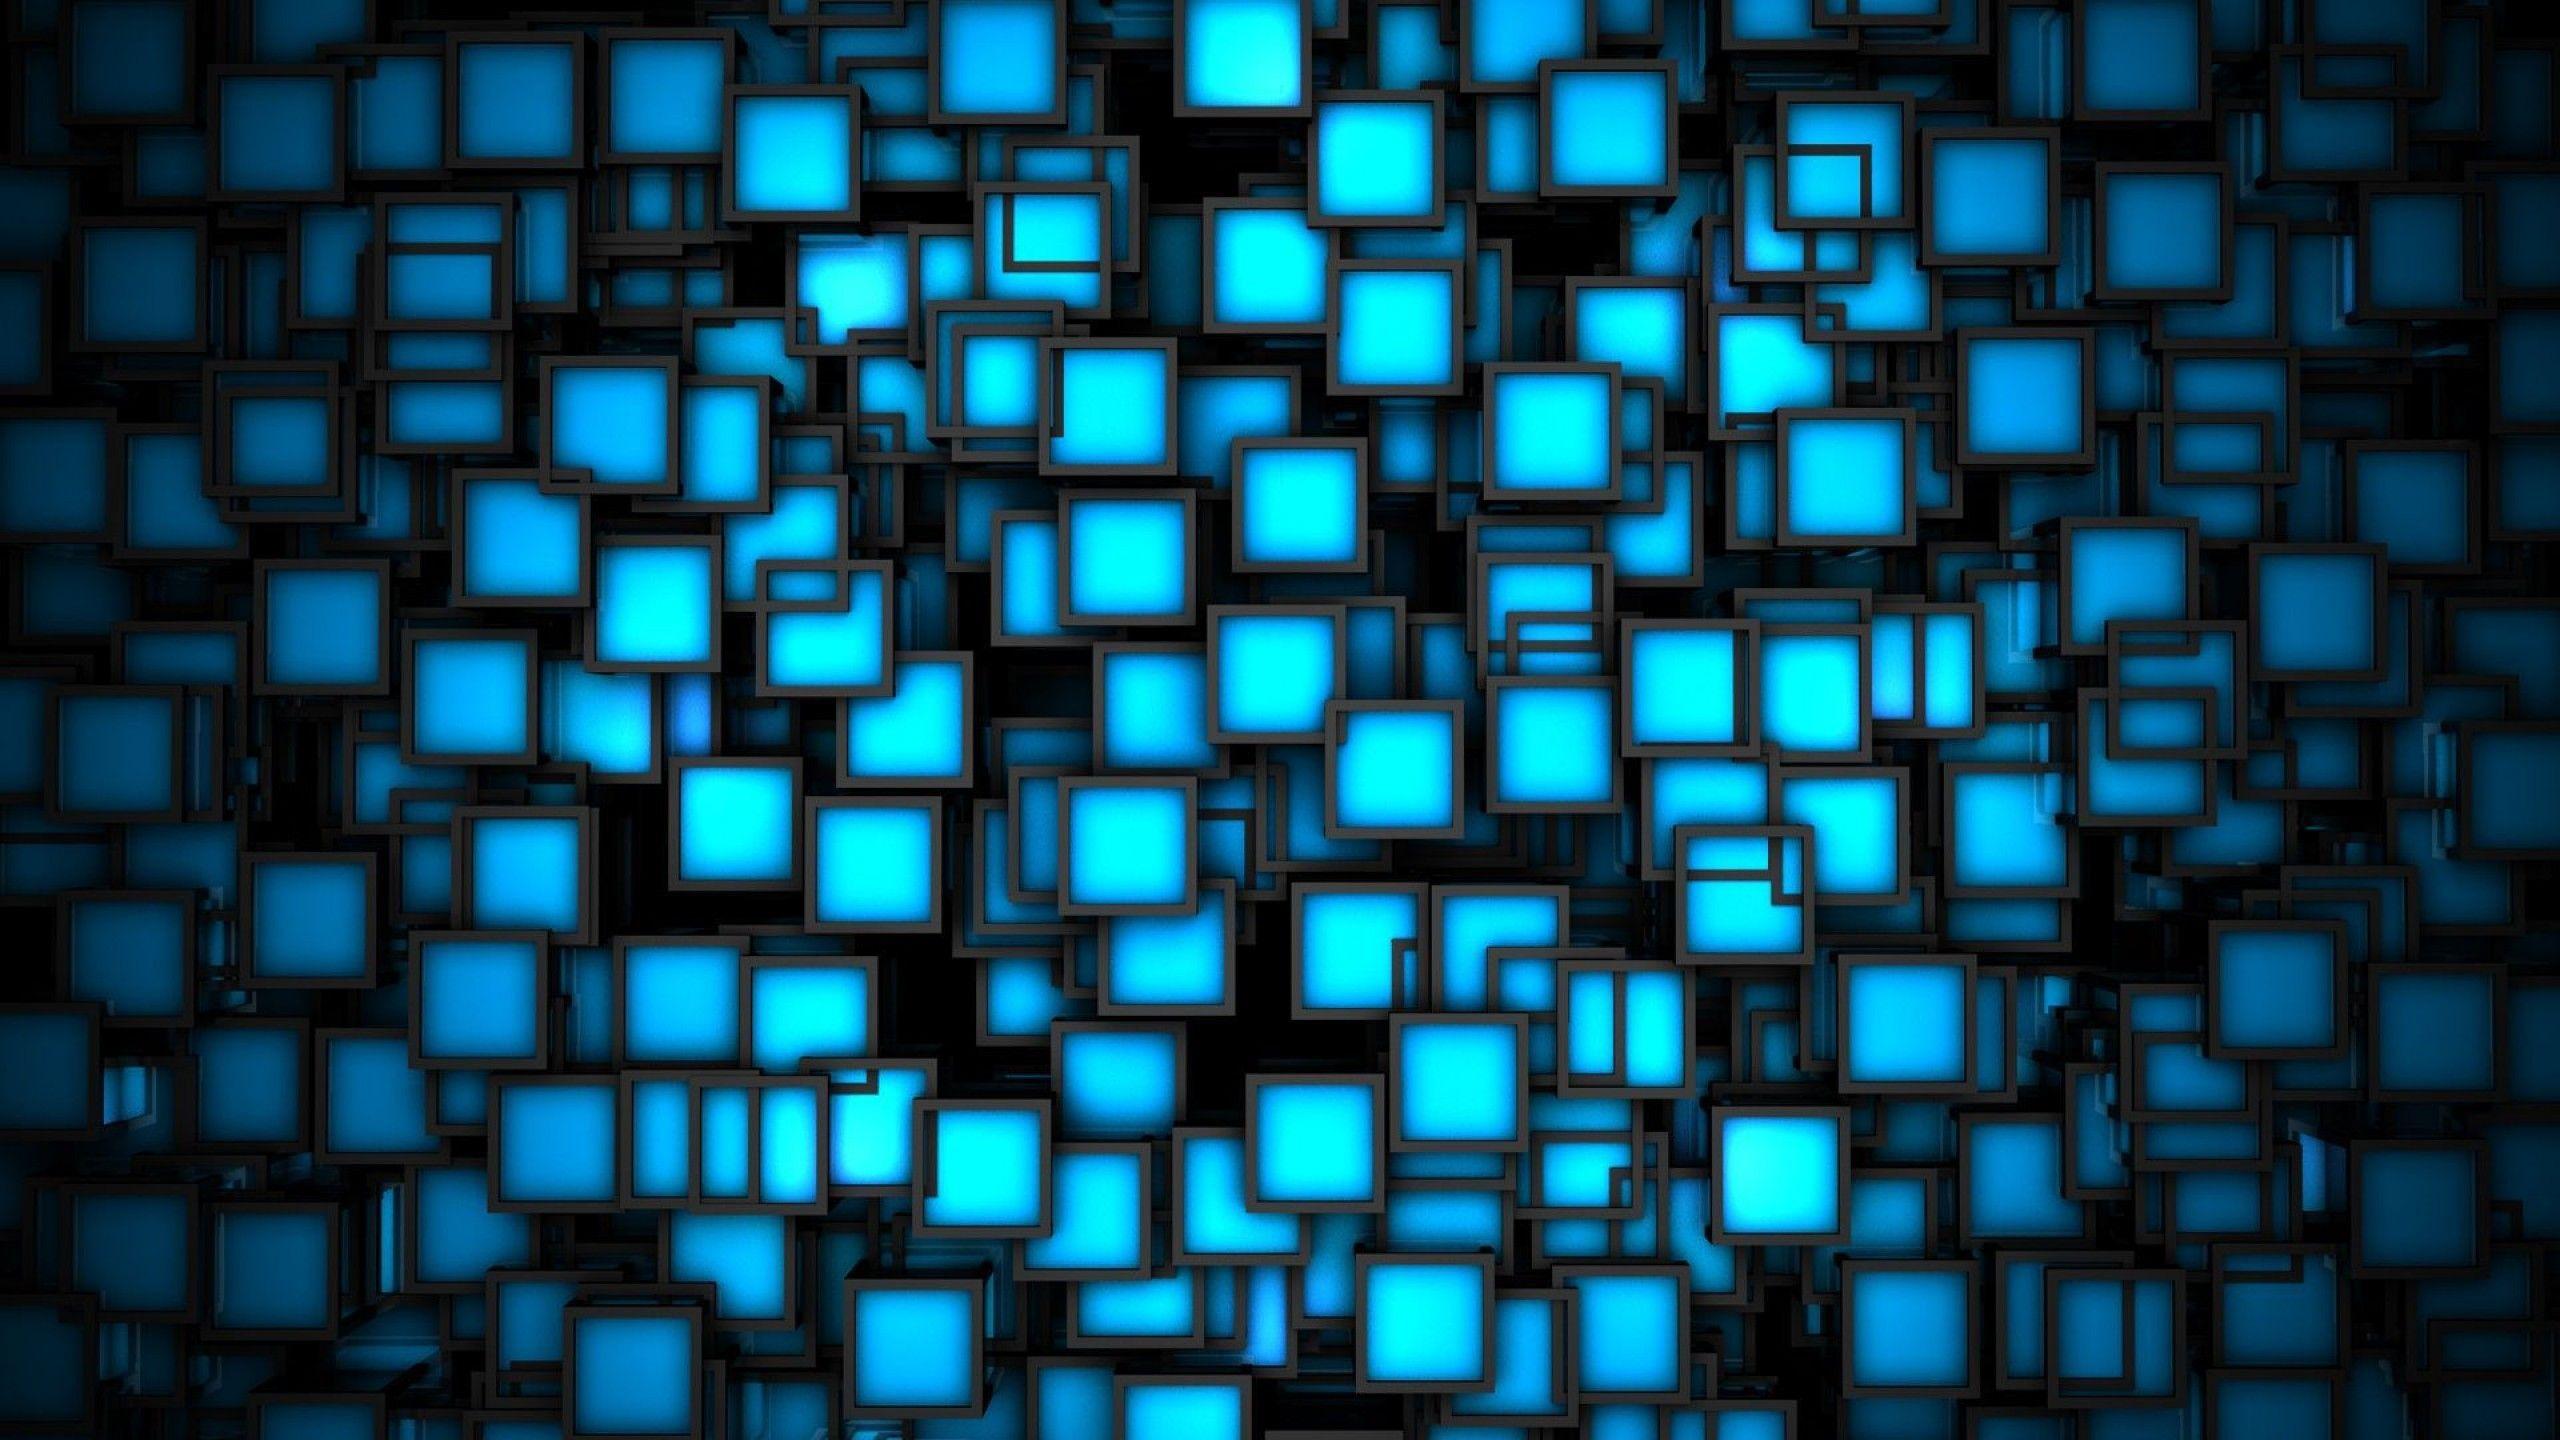 Cool 3D Wallpapers Blu HD Wallpaper, Backgrounds Image